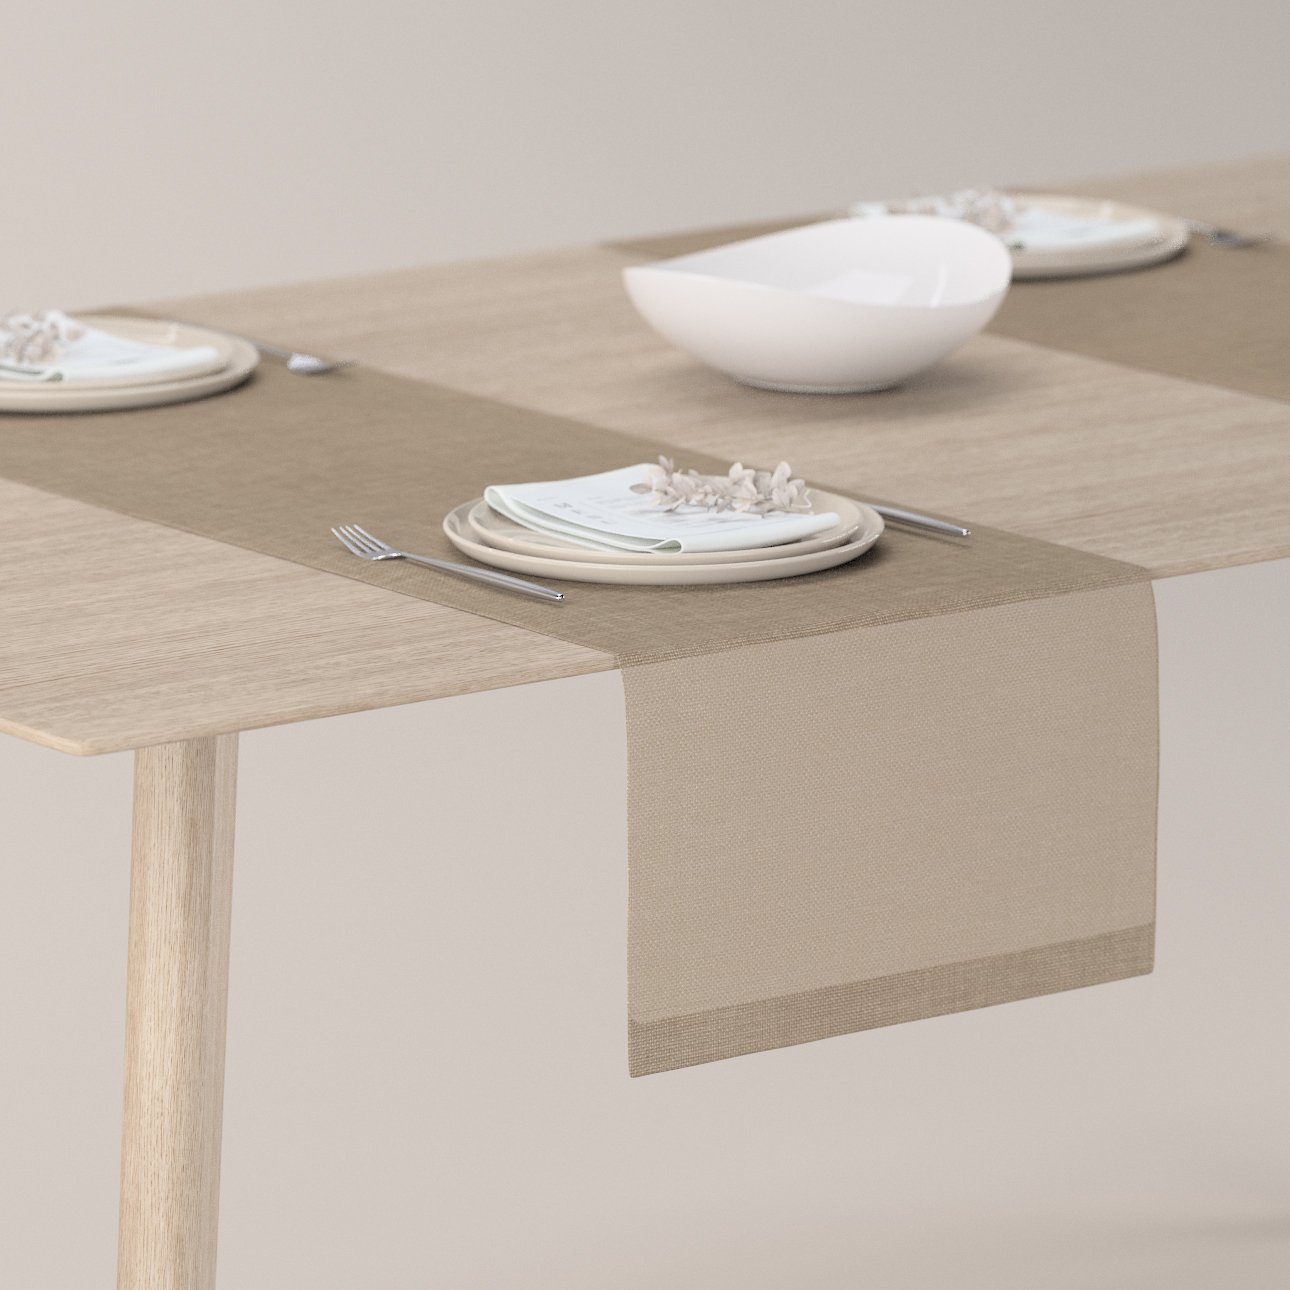 Dekoria Štóla na stôl, béžová, 40 x 130 cm, Sensuale Premium, 144-40